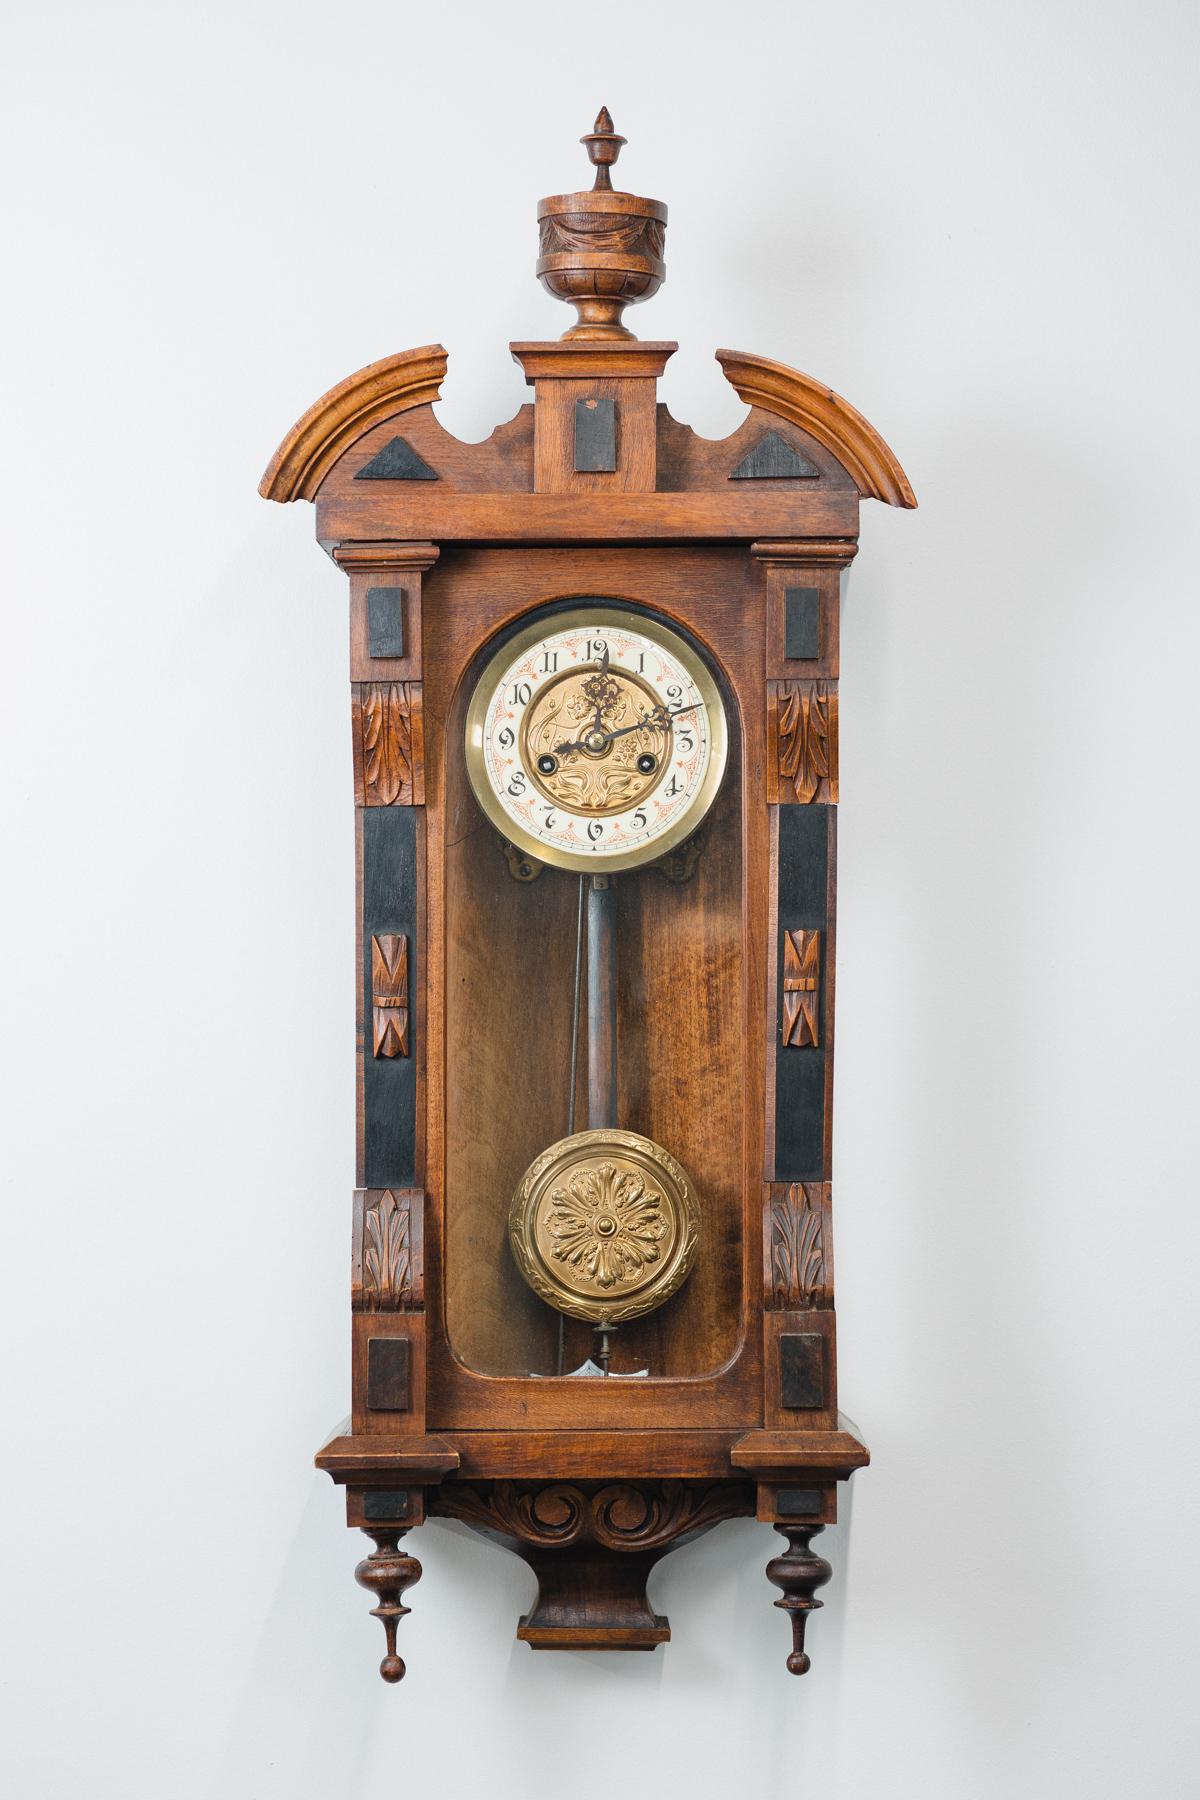 Large Elegant Antique Wooden Wall Clock